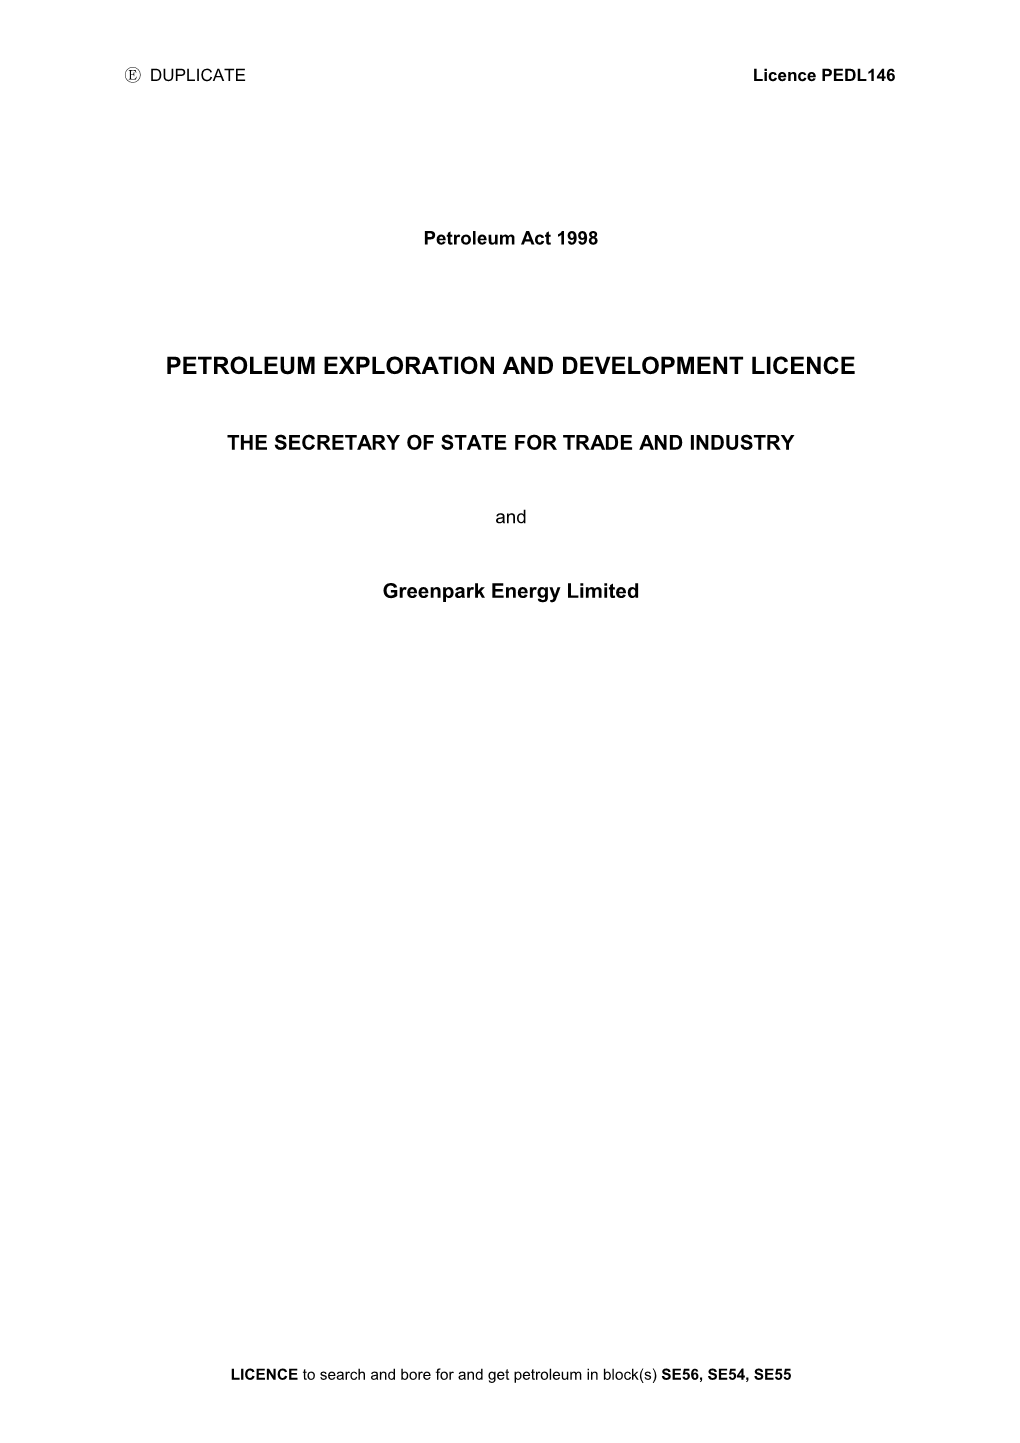 Petroleum Exploration and Development Licence